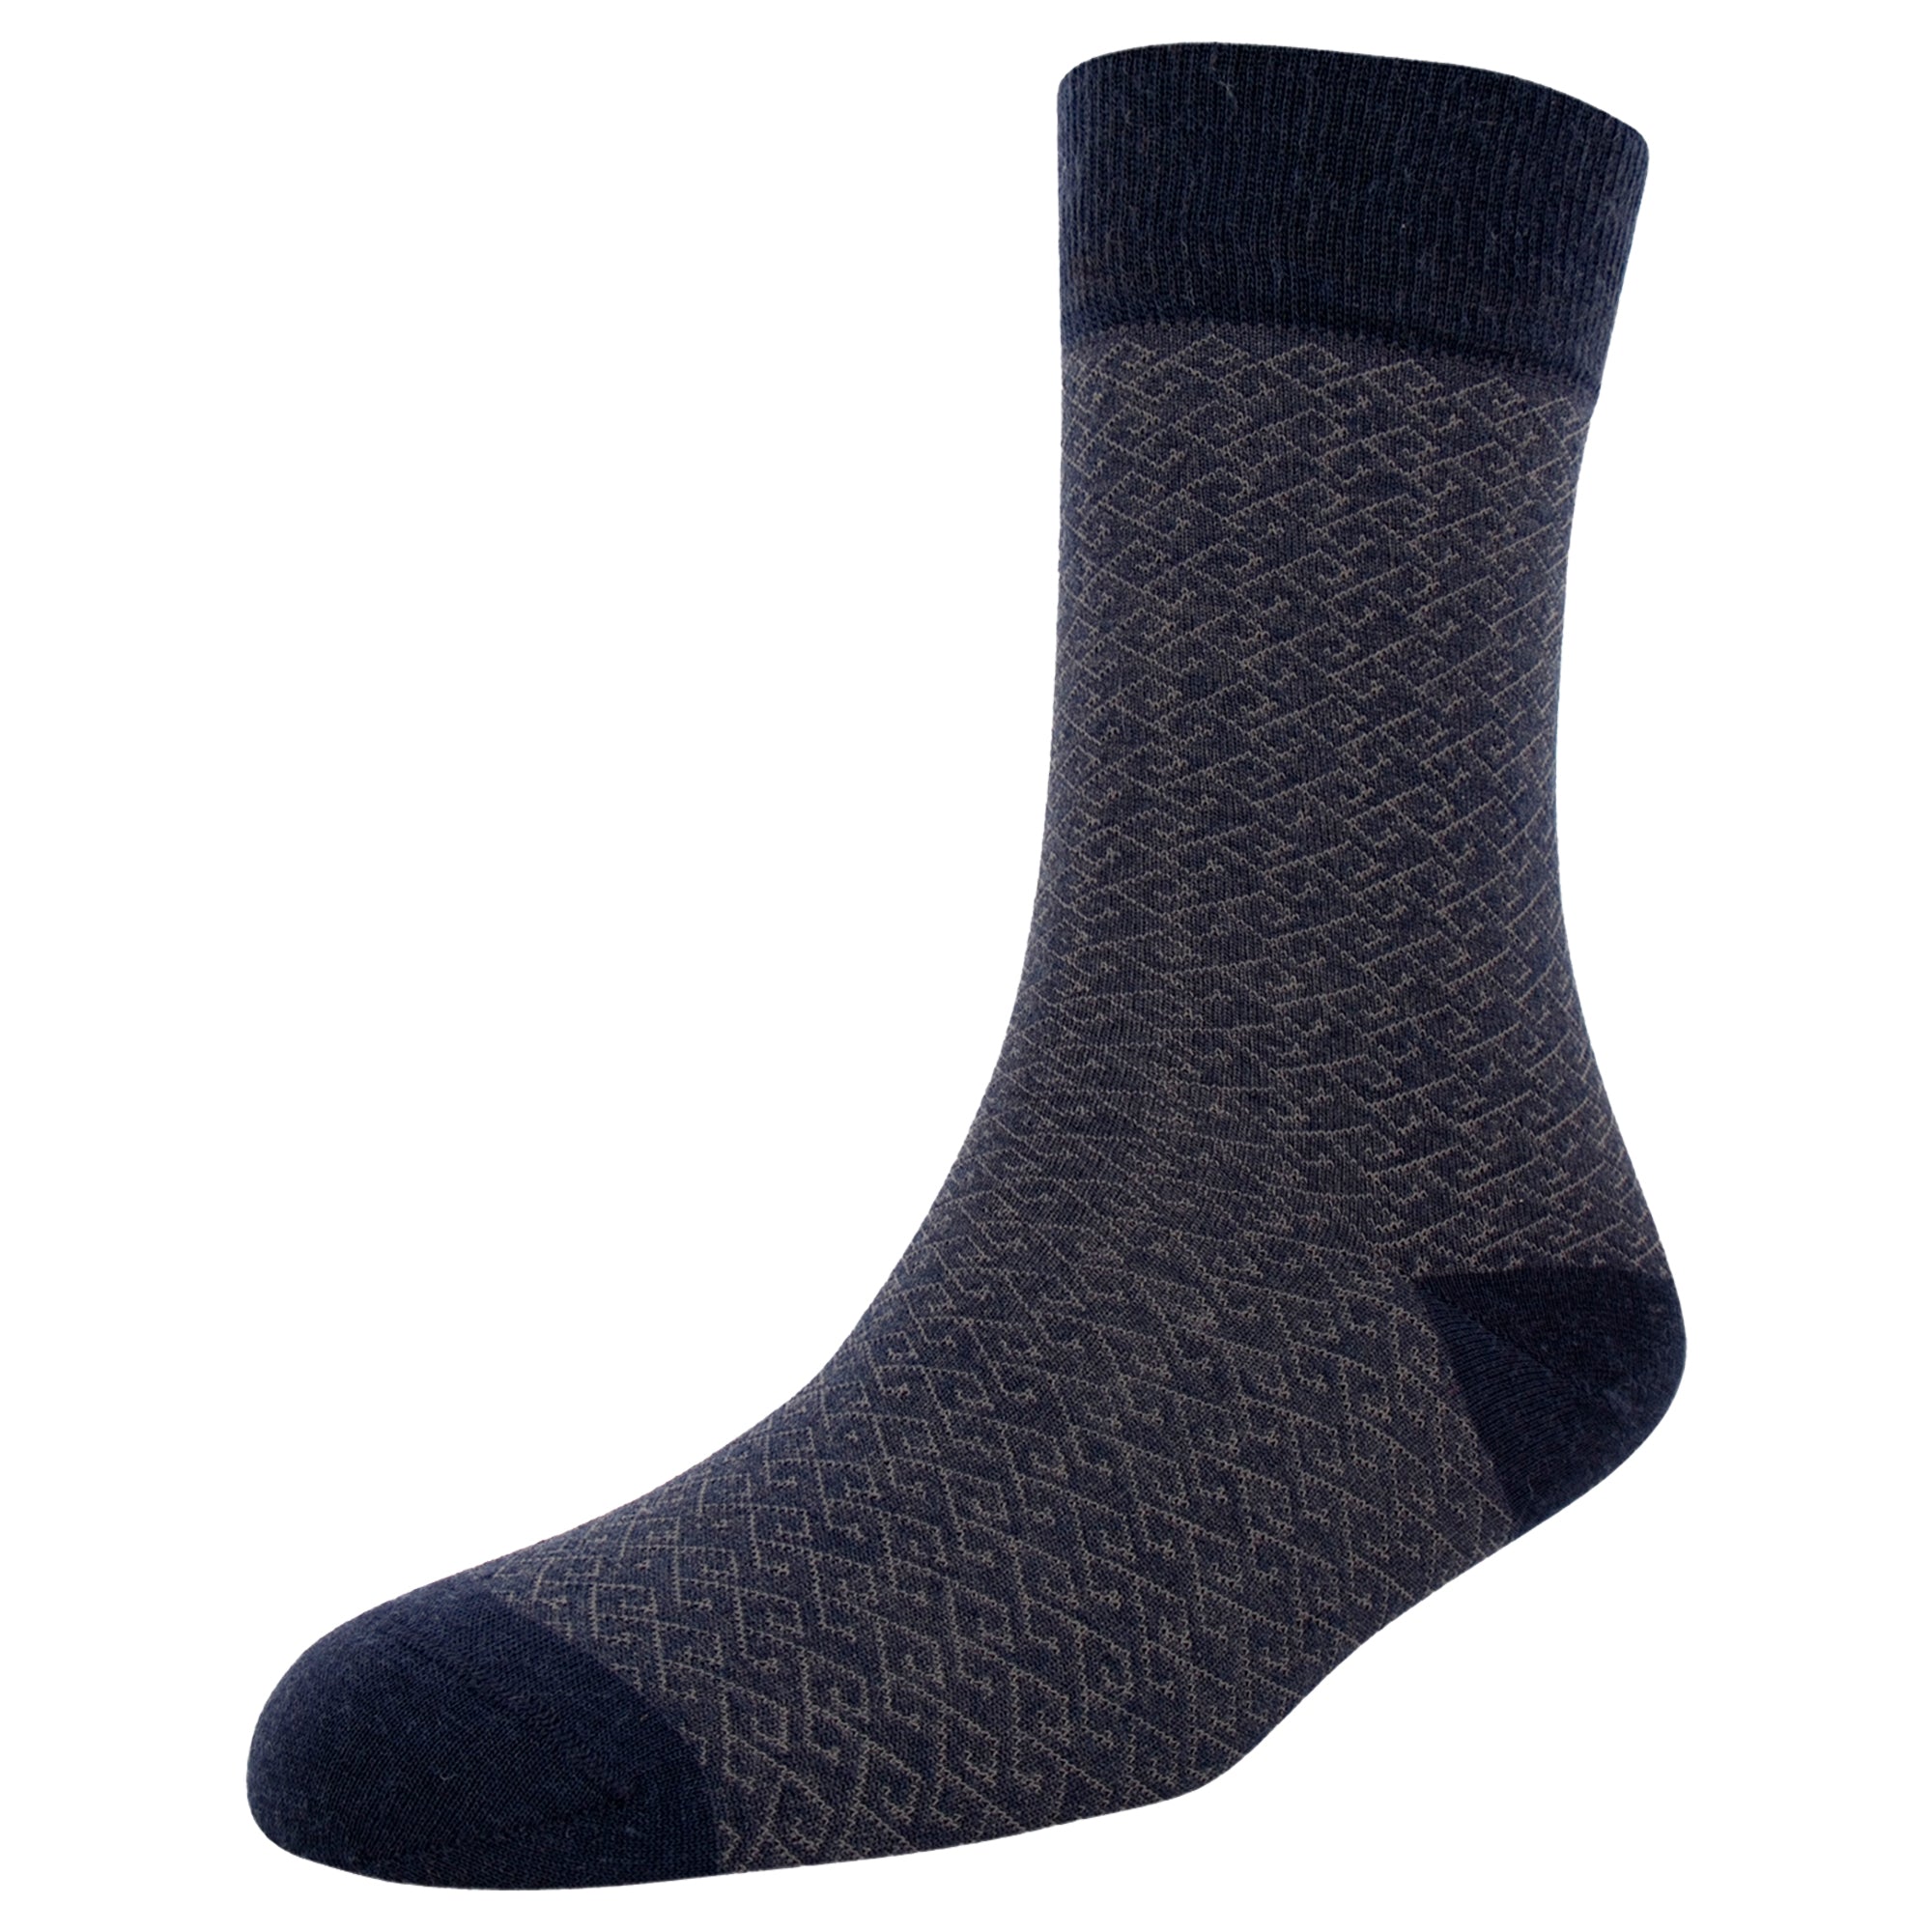 Men's Merino Wool Abstract Fashion Standard Length Socks